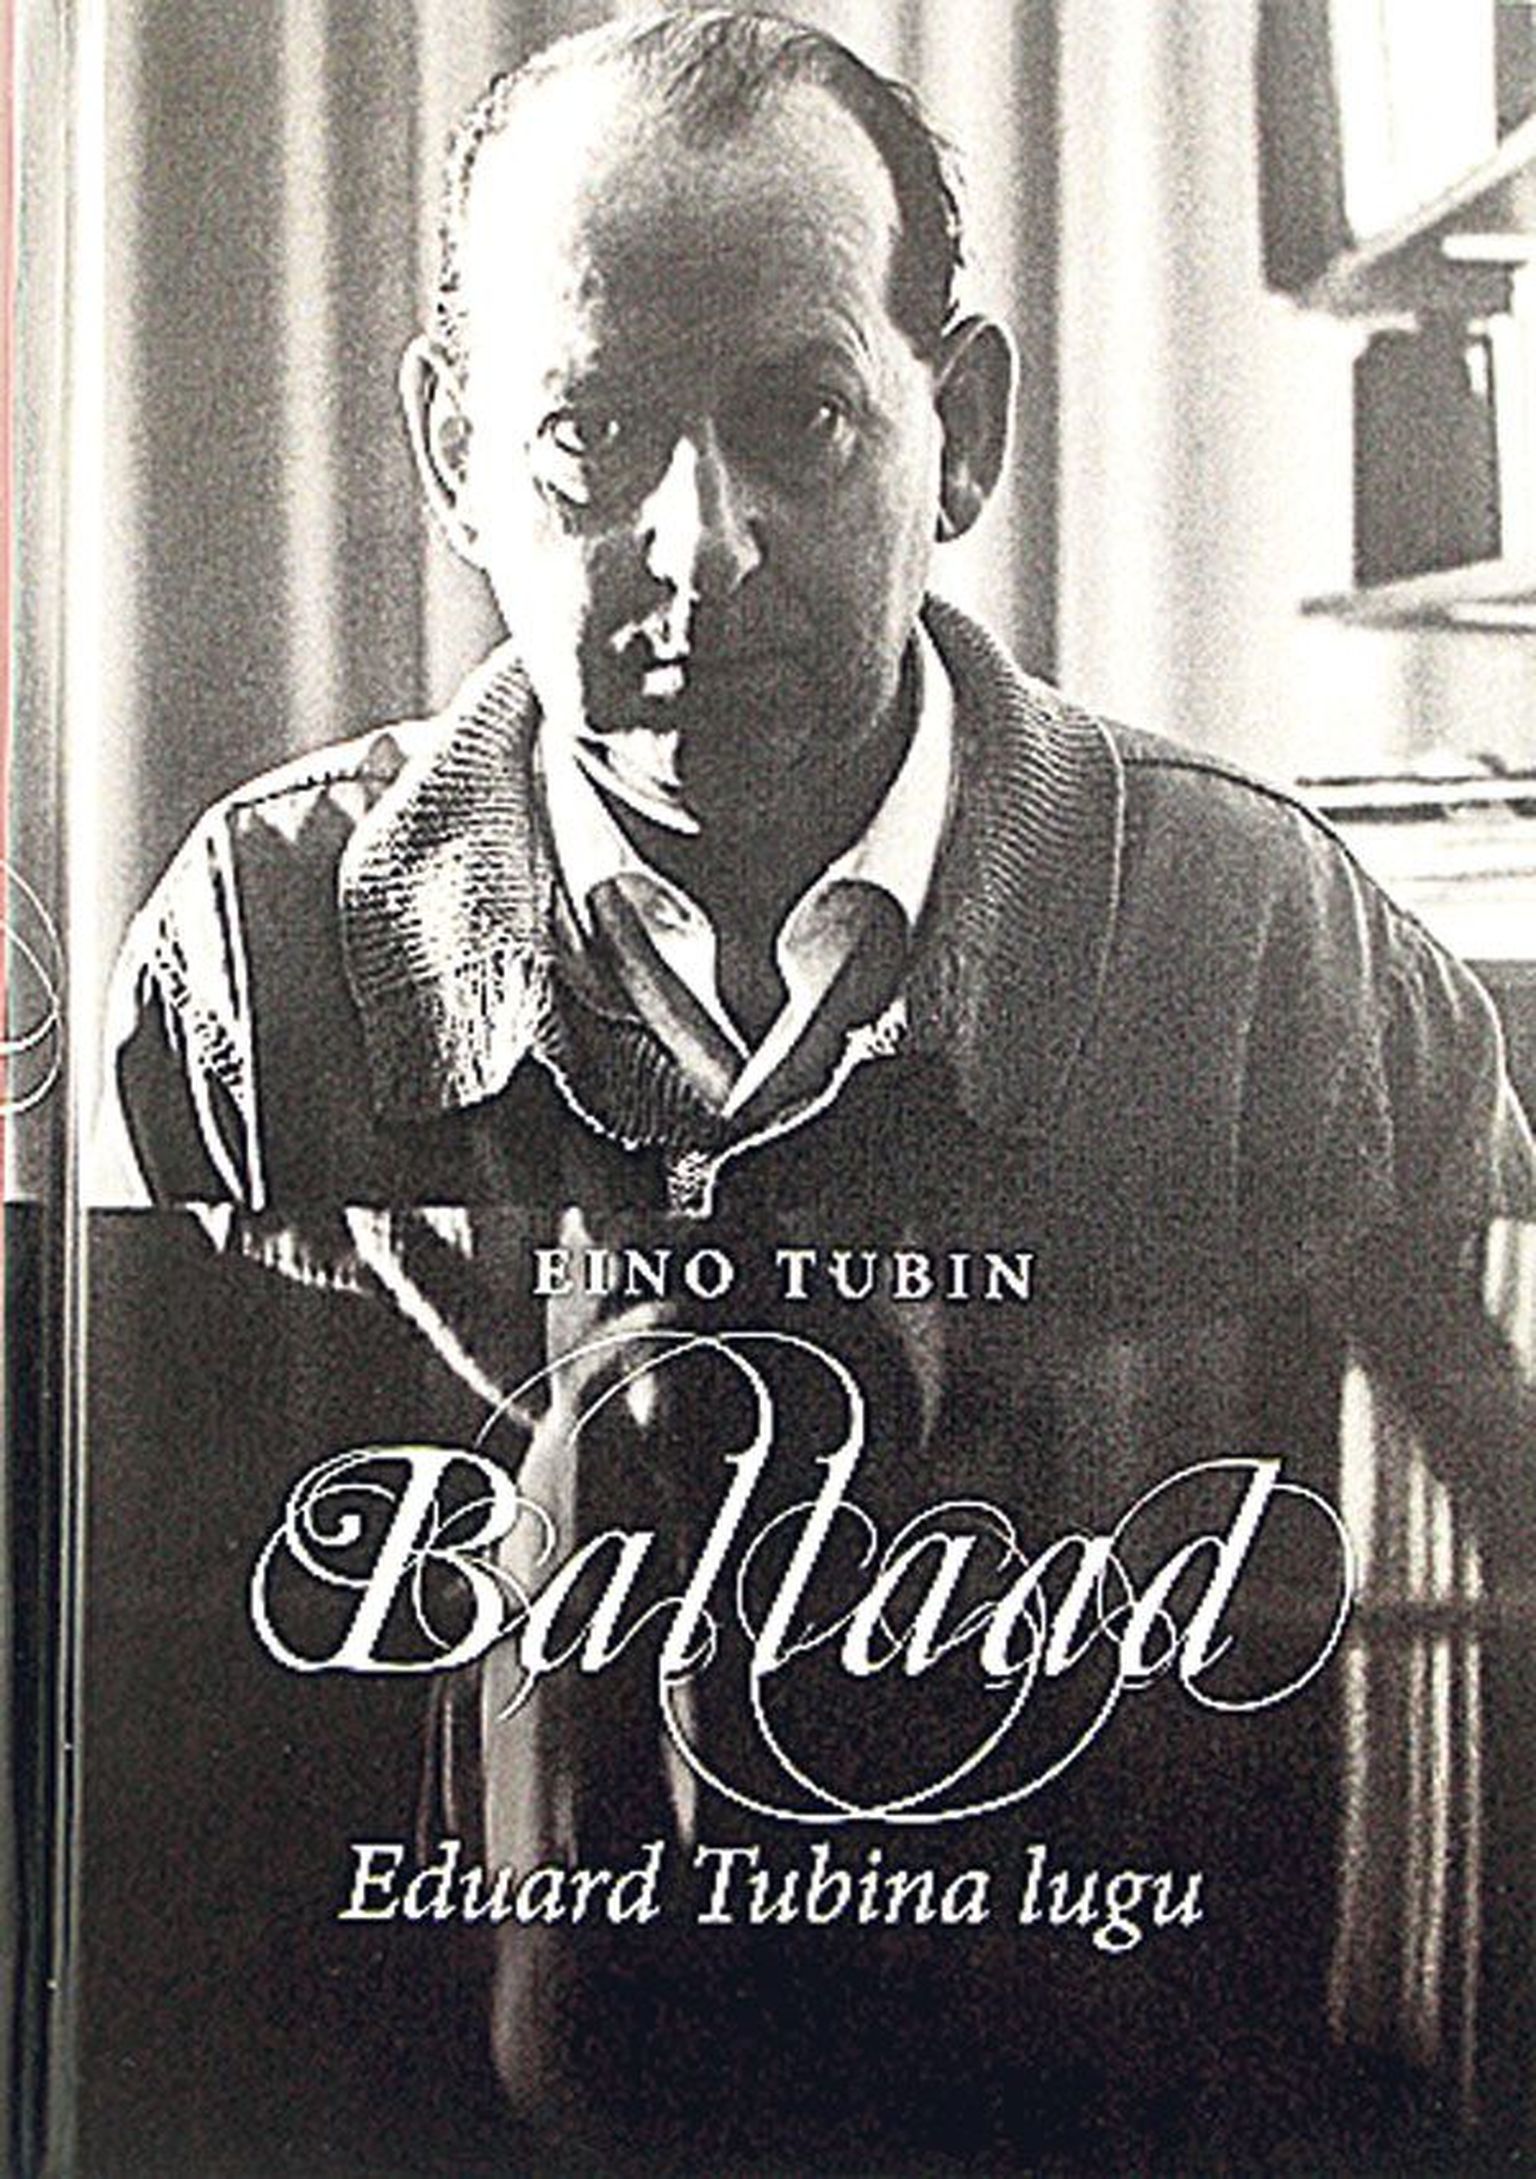 Eino Tubin, «Ballaad.
Eduard Tubina lugu»,
2015,
240 lk.